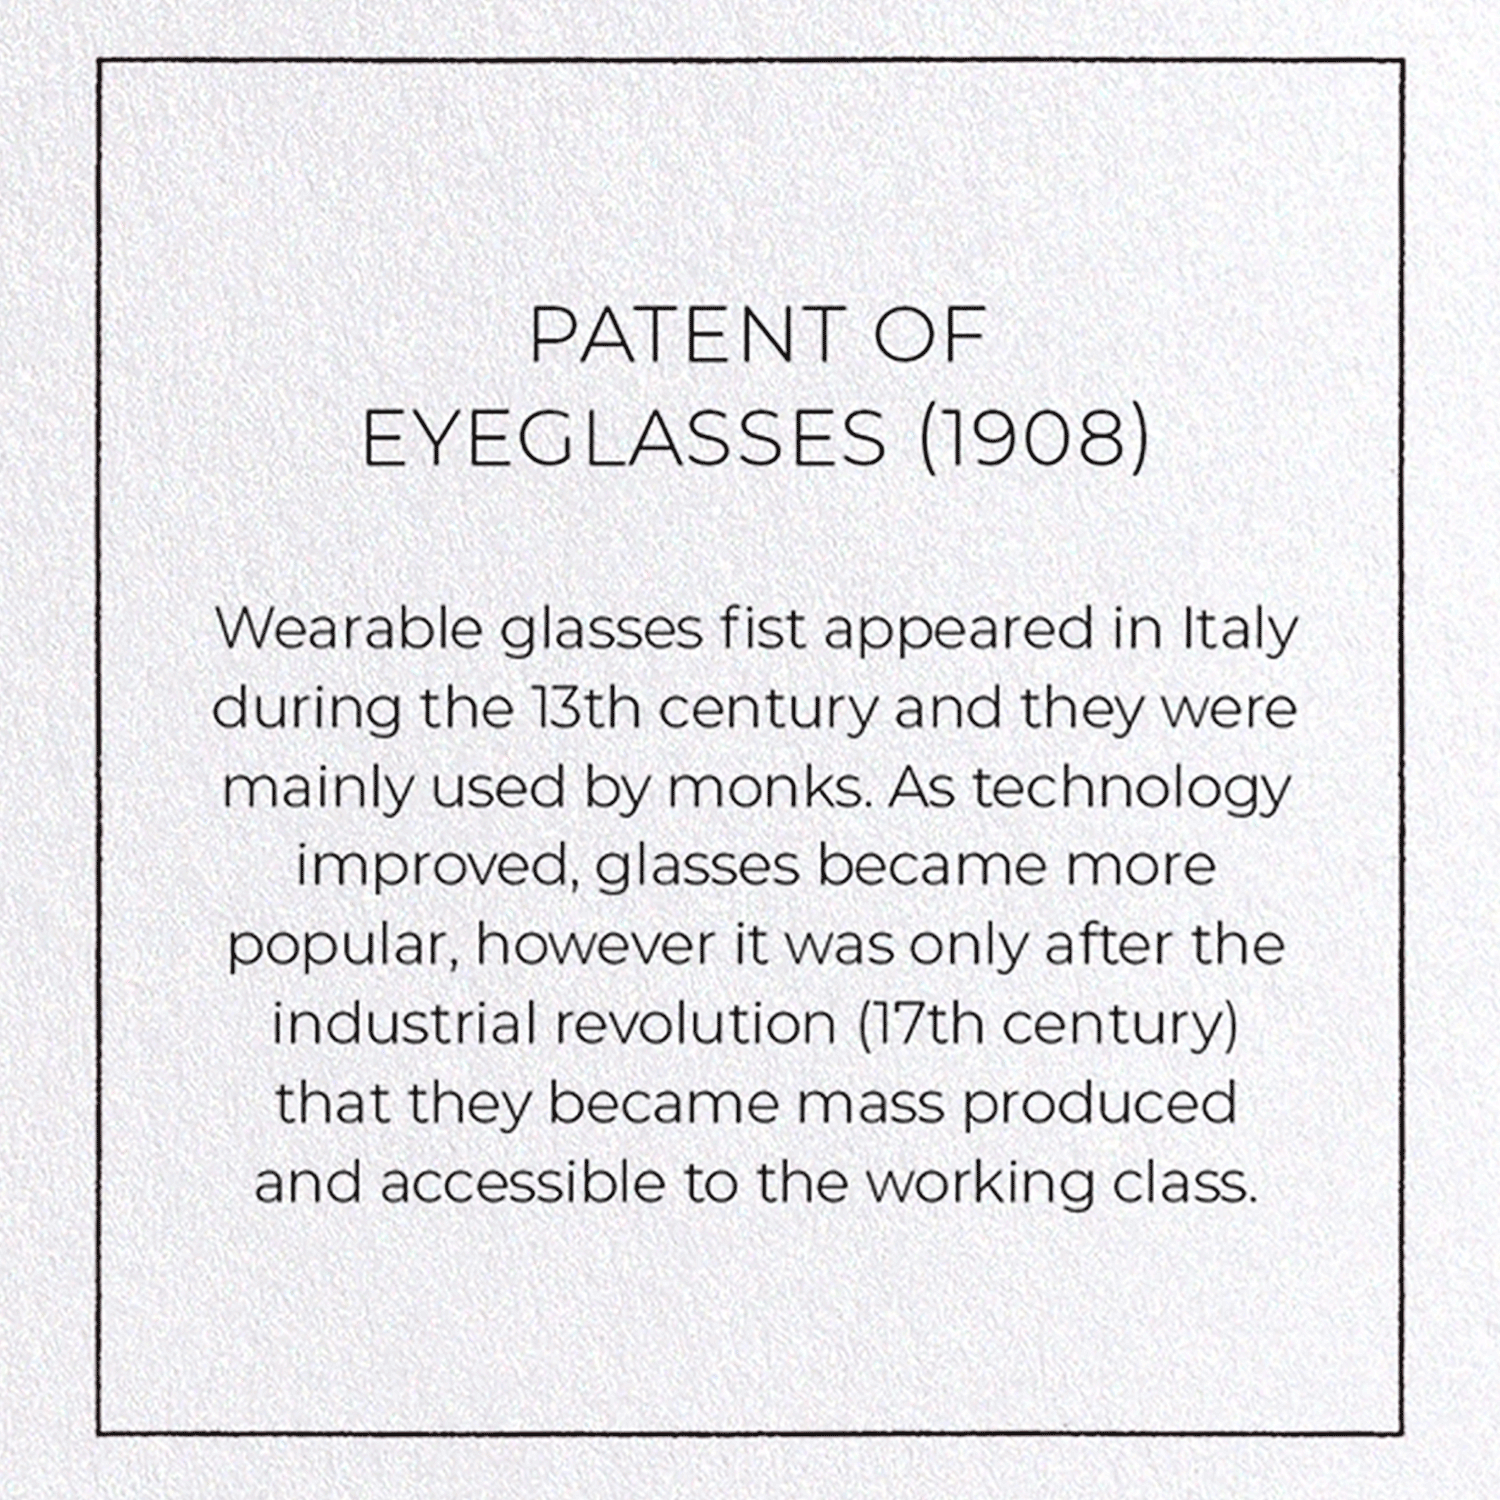 PATENT OF EYEGLASSES (1908)